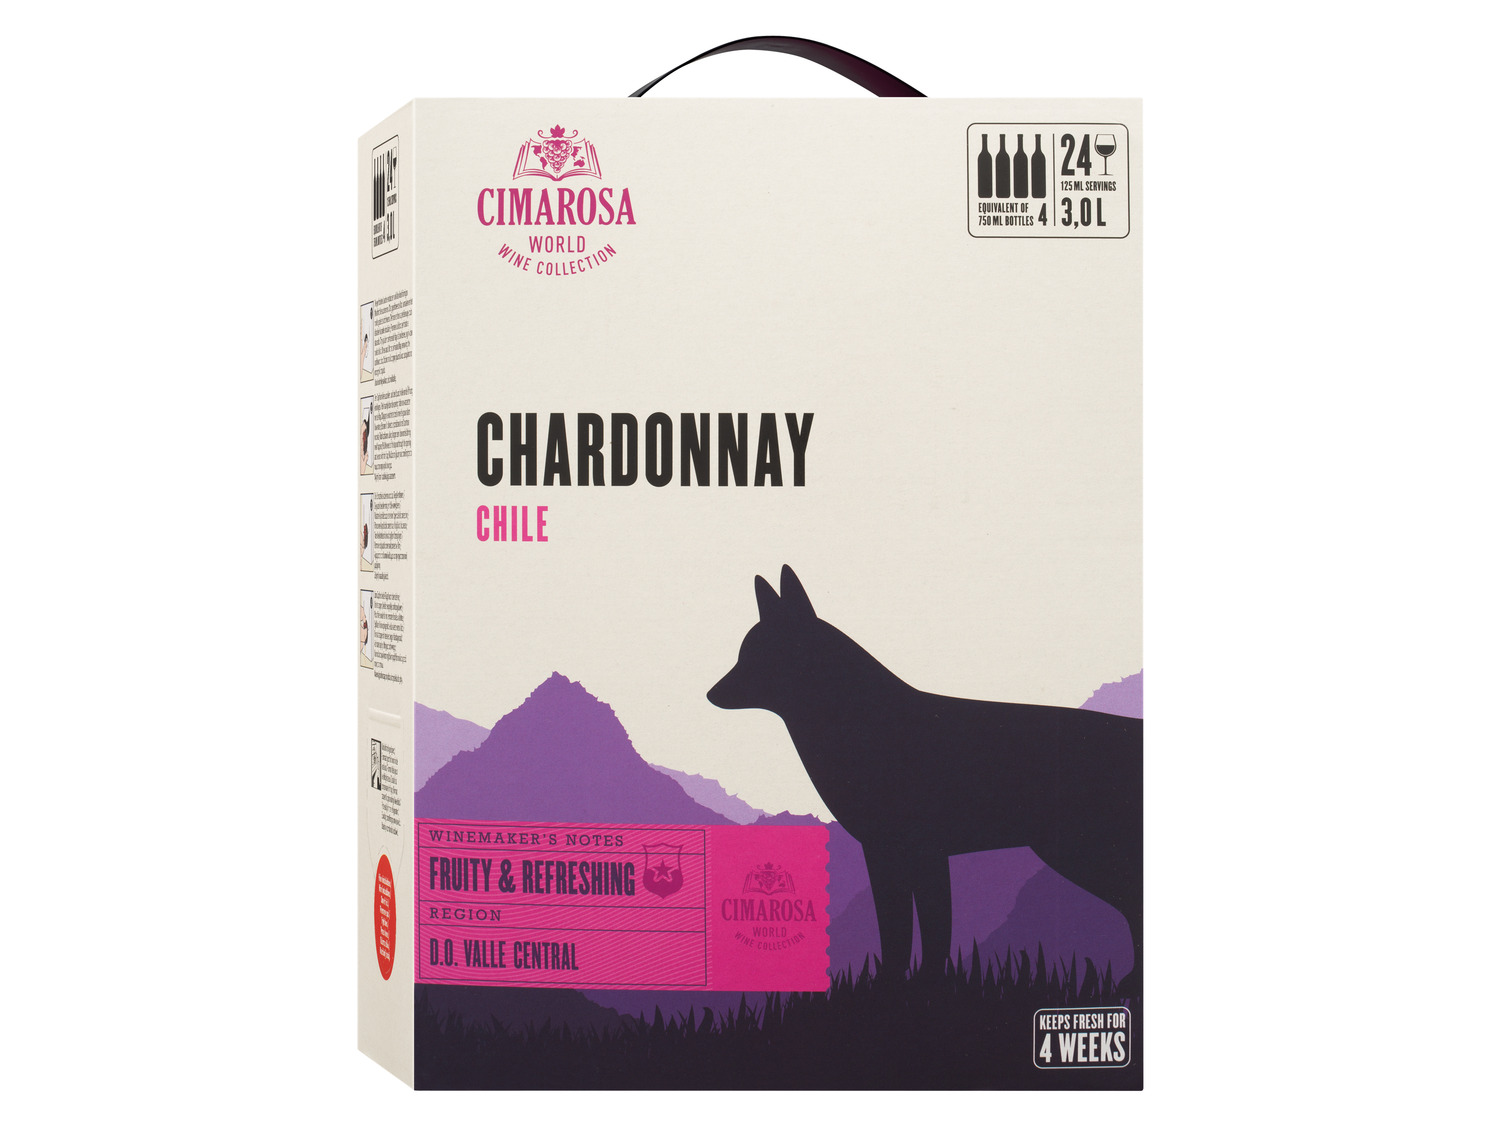 Chardonnay Chile 3,0-l-Bag-in-Box trocken, Weißwein